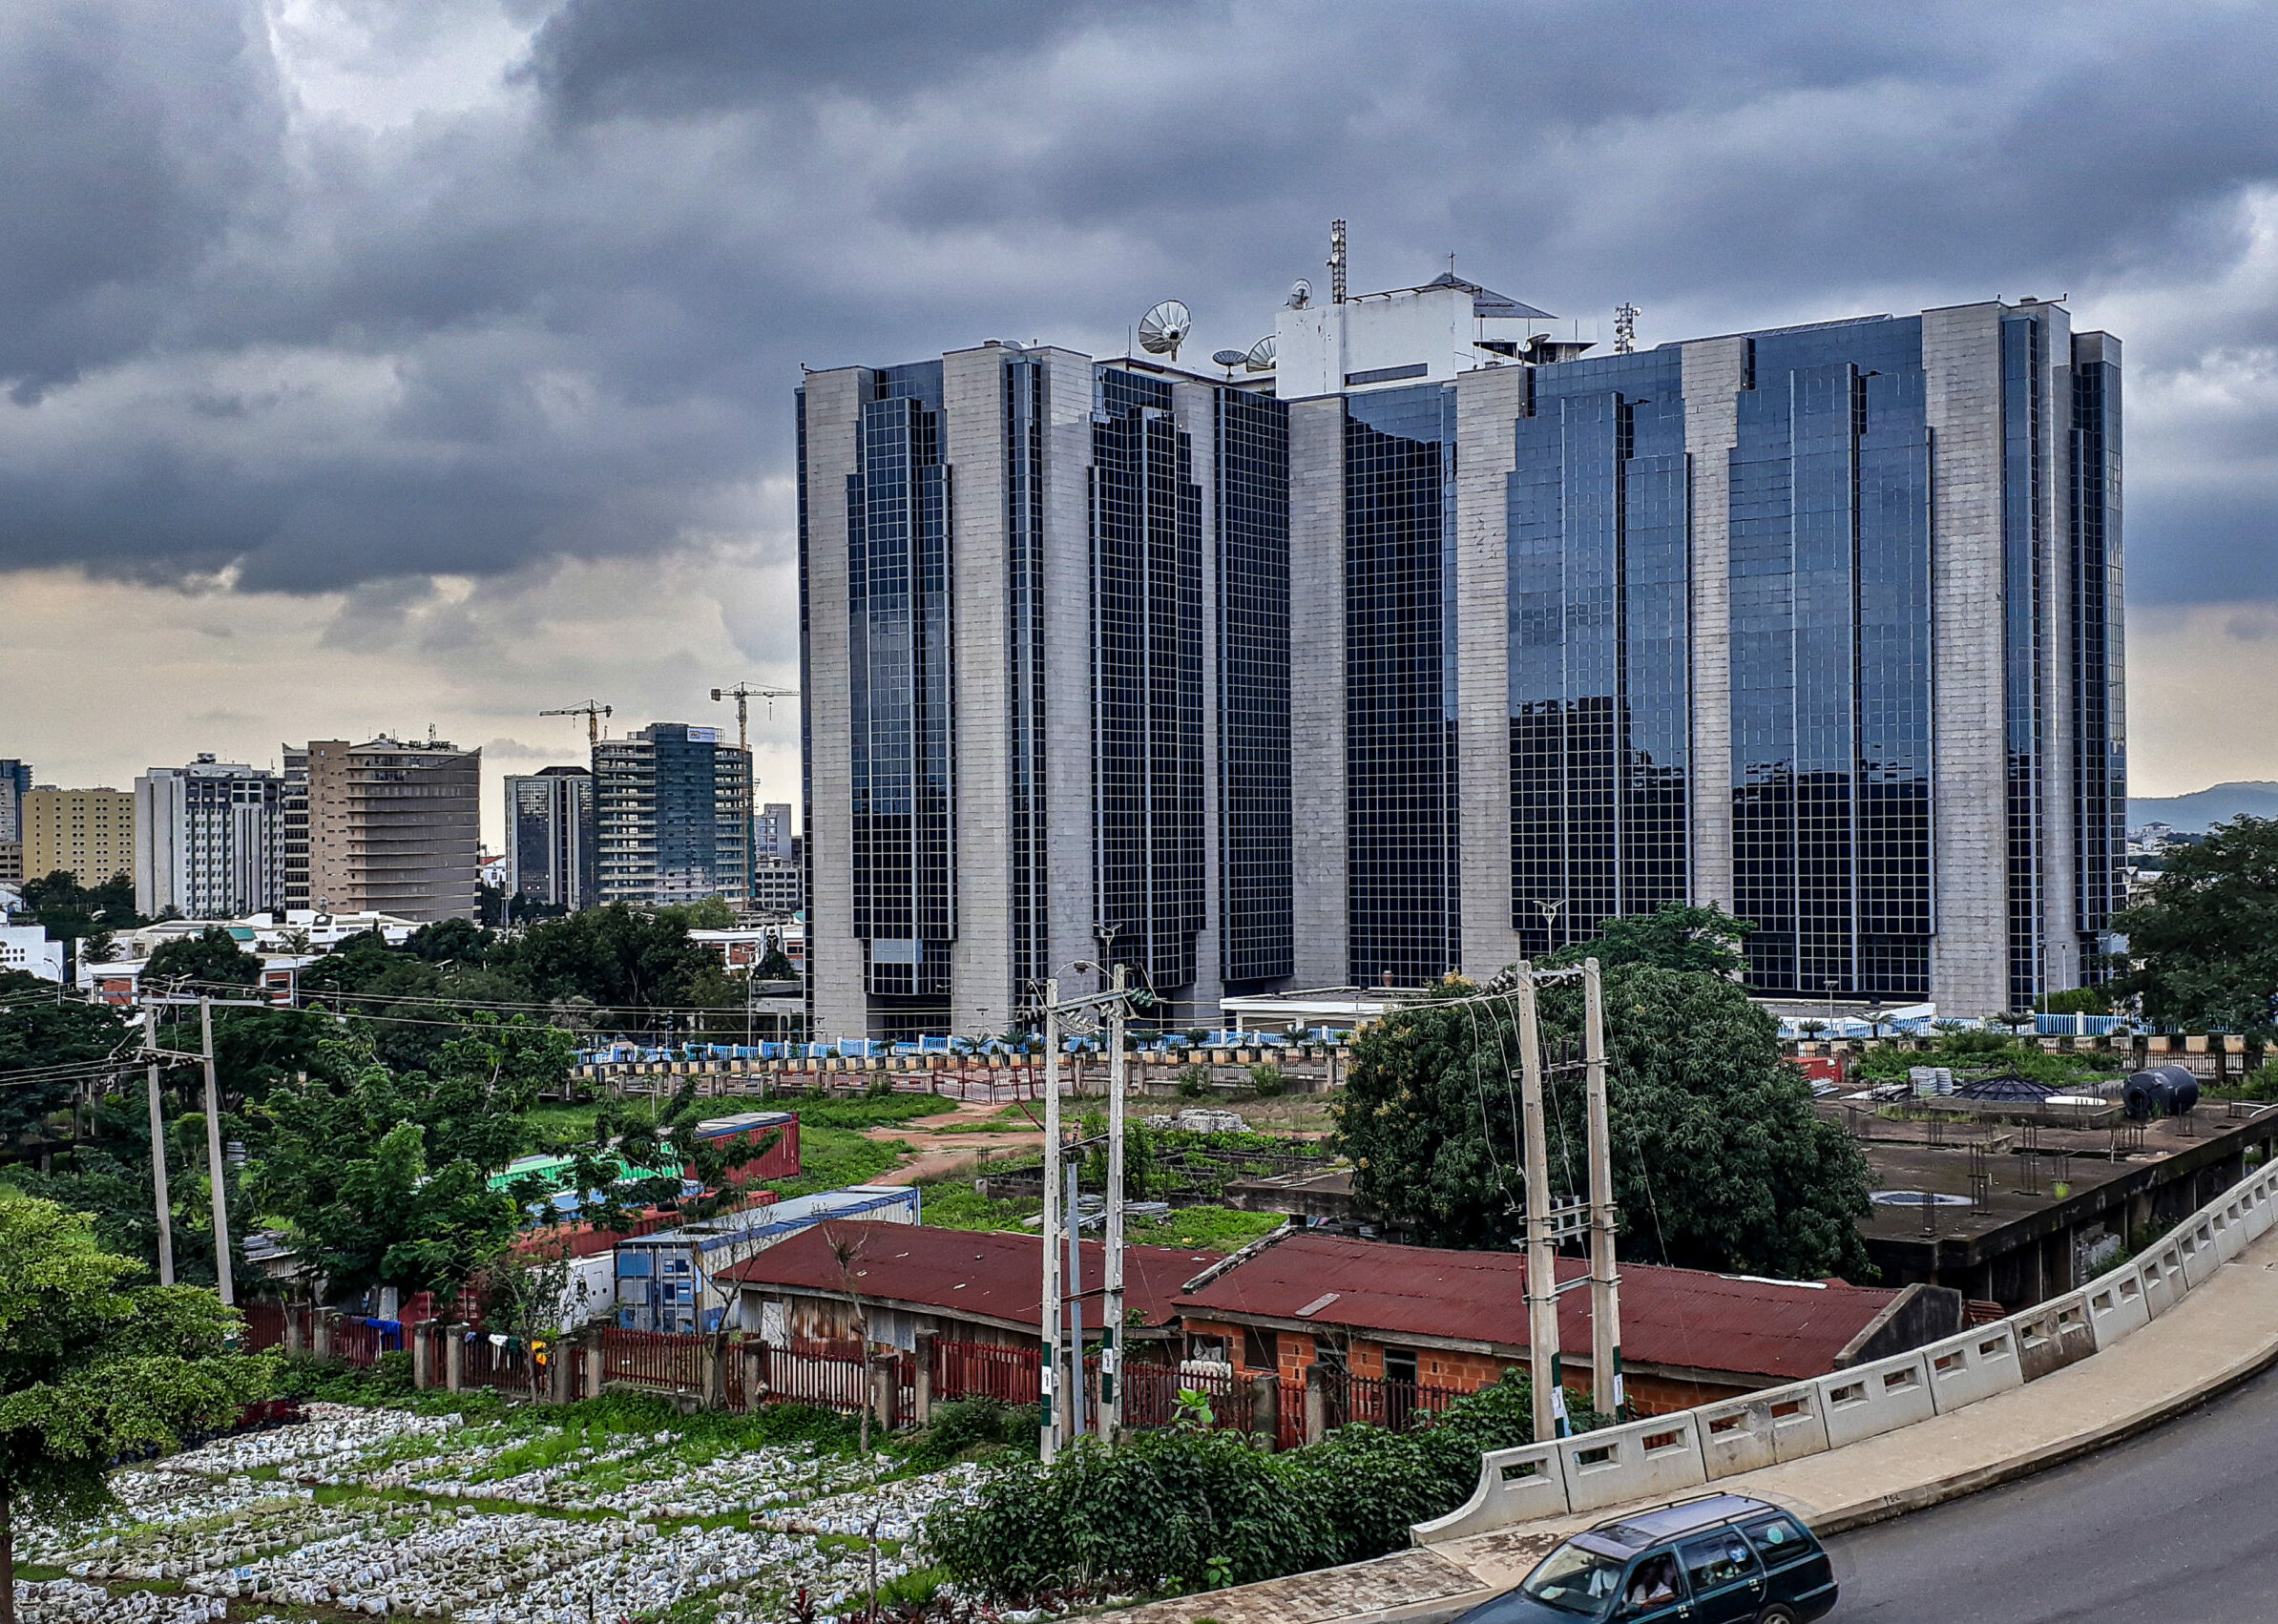 The Central Bank of Nigeria, CBN. [PHOTO CREDIT: Ehud Kaduna]